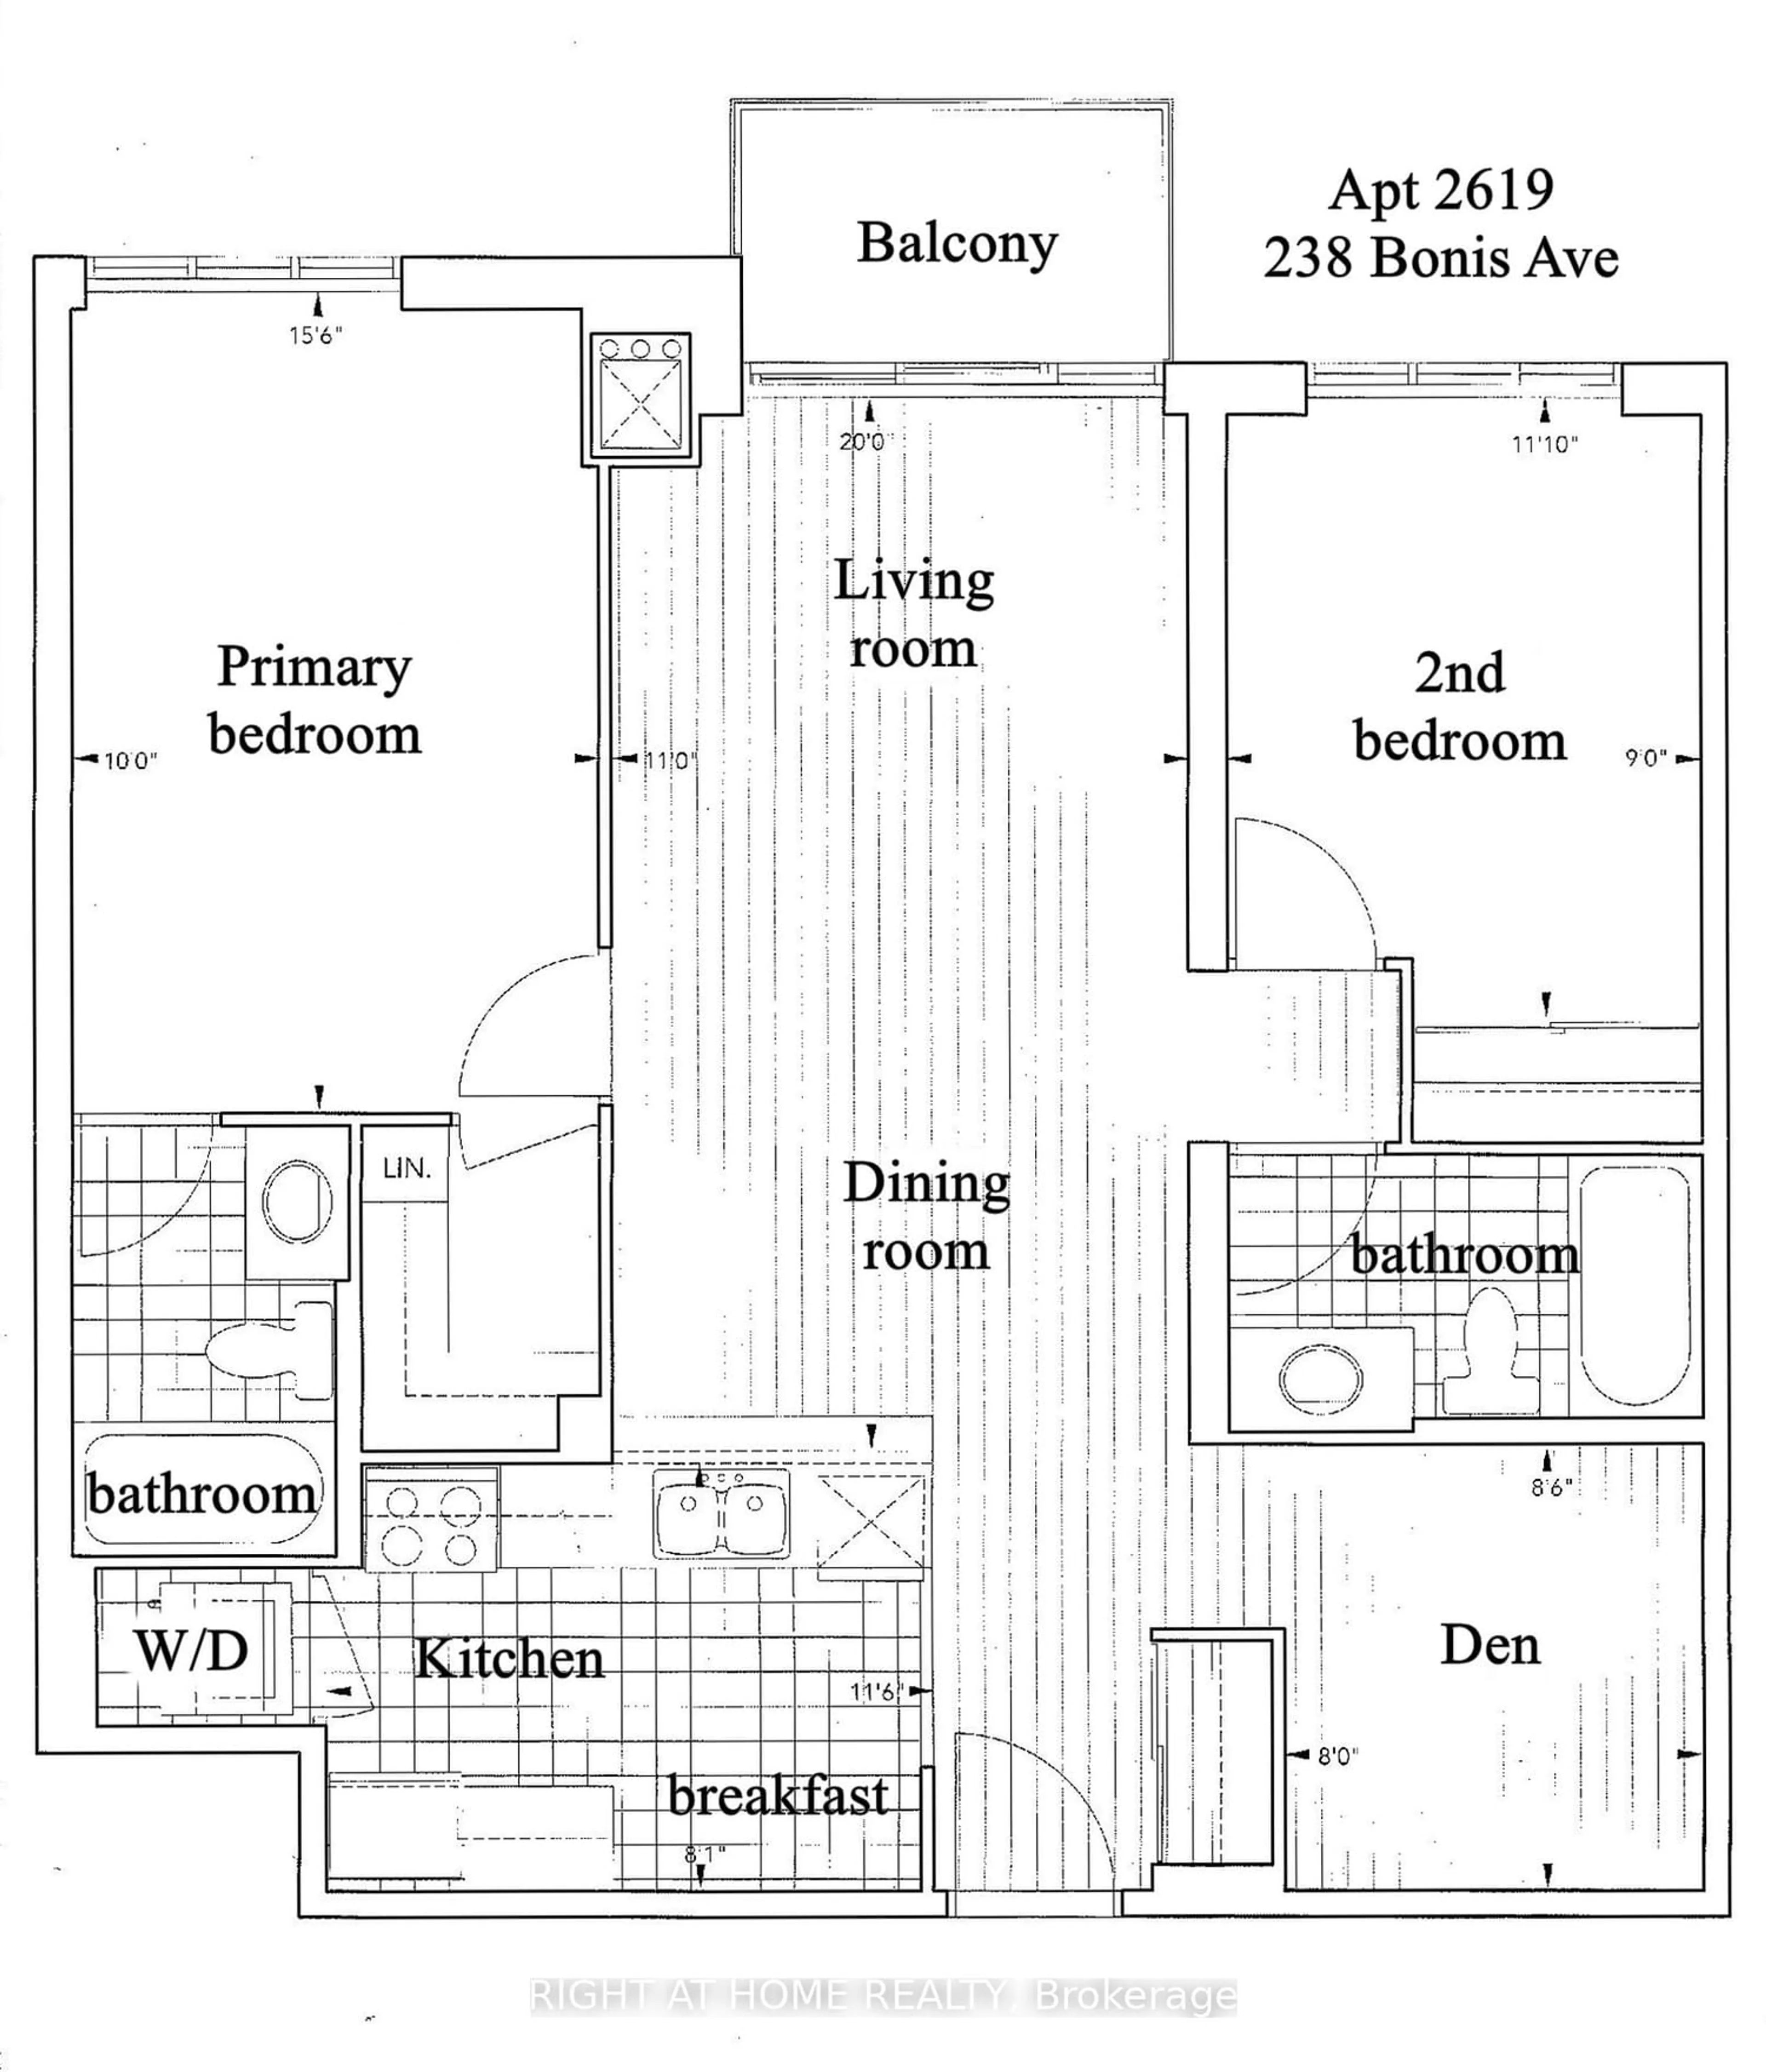 Floor plan for 238 Bonis Ave #2619, Toronto Ontario M1T 3W7